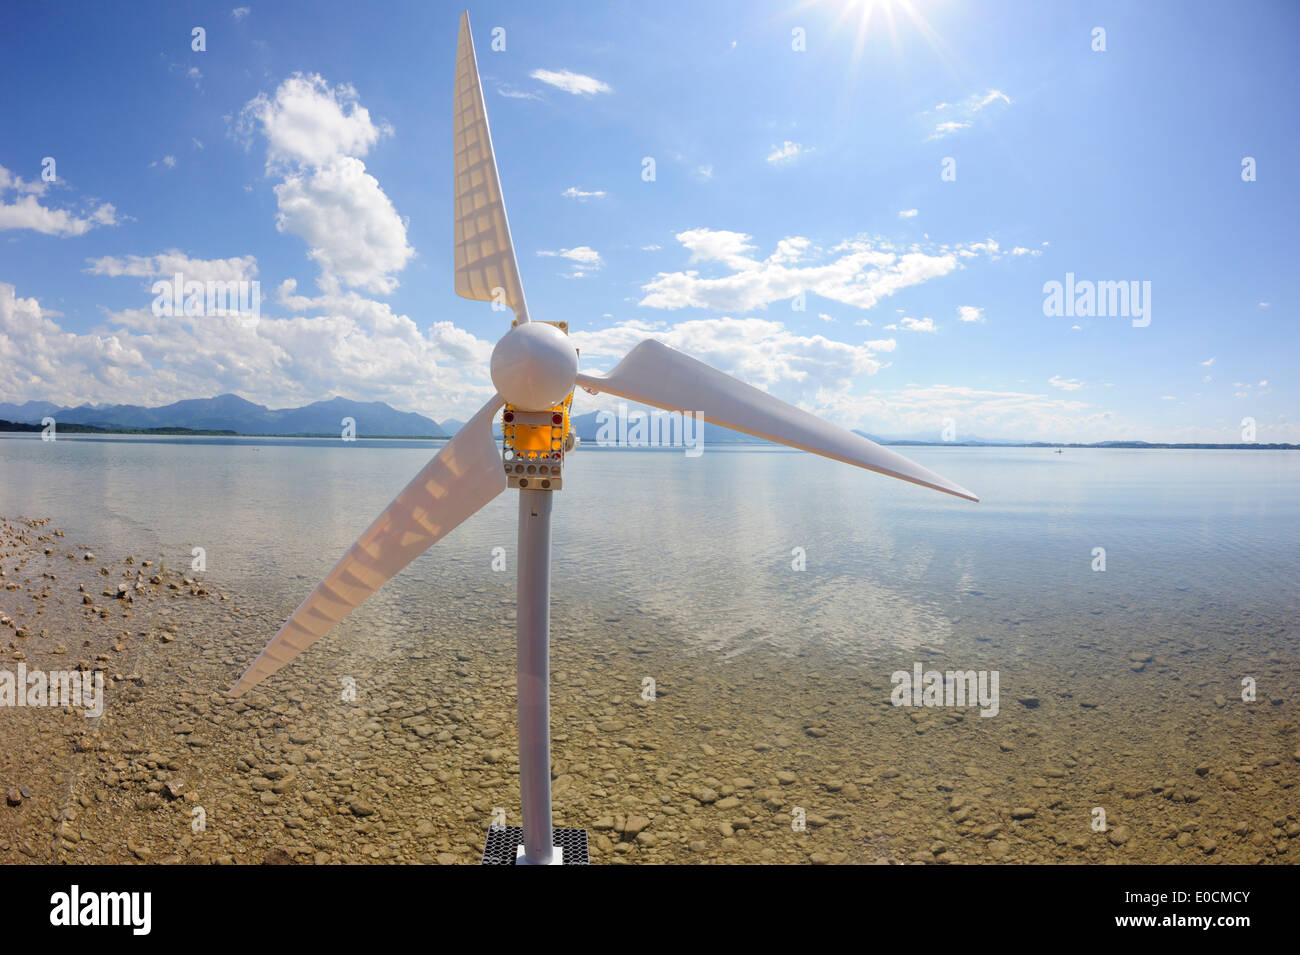 Model of wind power plant at shore of lake producing electricity, lake Chiemsee, Chiemgau, Upper Bavaria, Bavaria, Germany, Euro Stock Photo